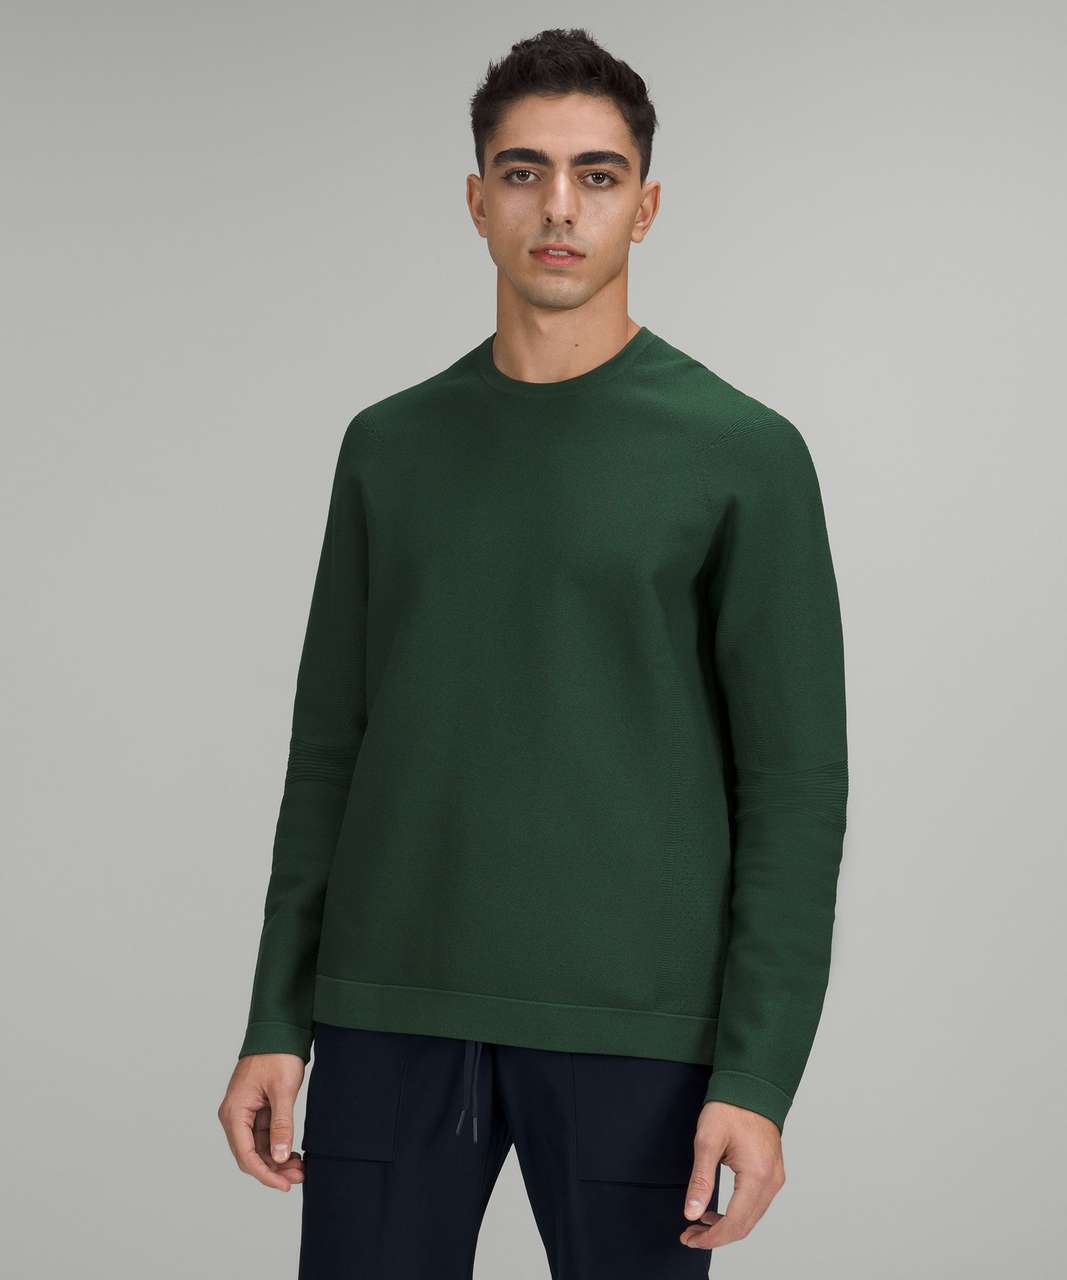 Lululemon AllAround Crewneck Sweater - Dark Olive / Everglade Green